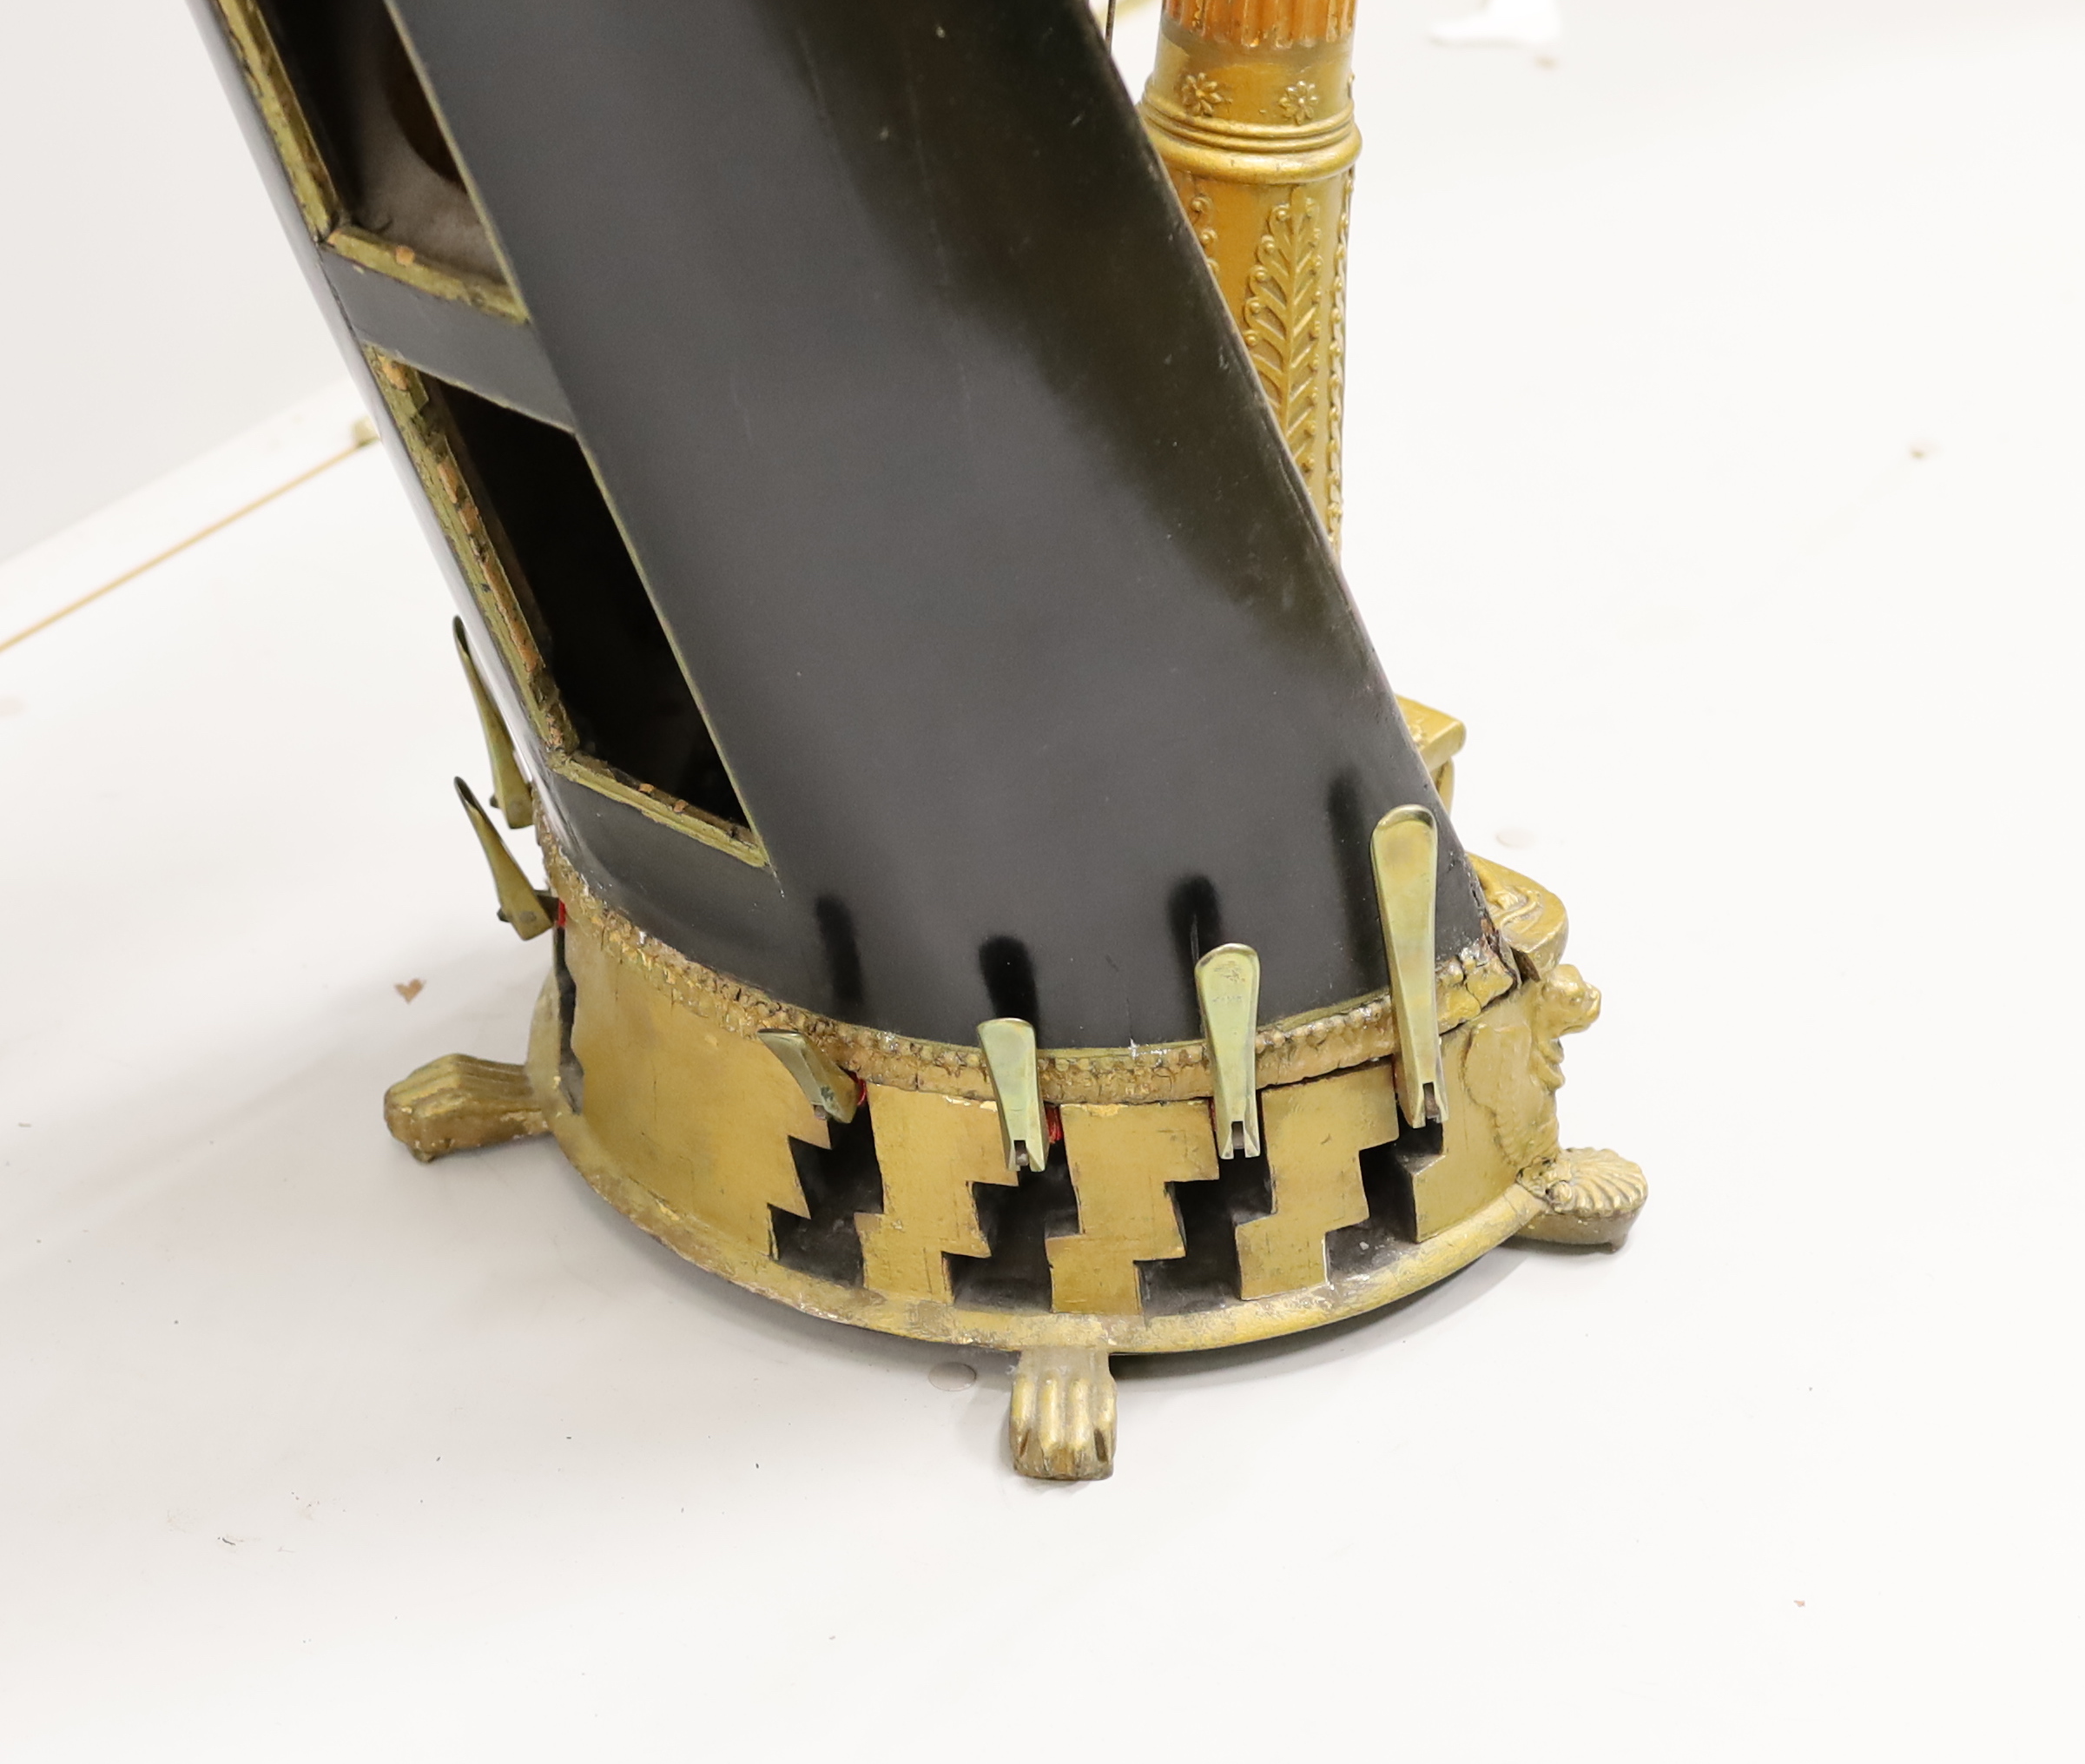 A seven pedal harp by Sebastian Erard, 18 Great Marlborough St. London, Patent N4164, cedar soundboard, fluted pillar with gilt Classical style capital, 170.5cm high